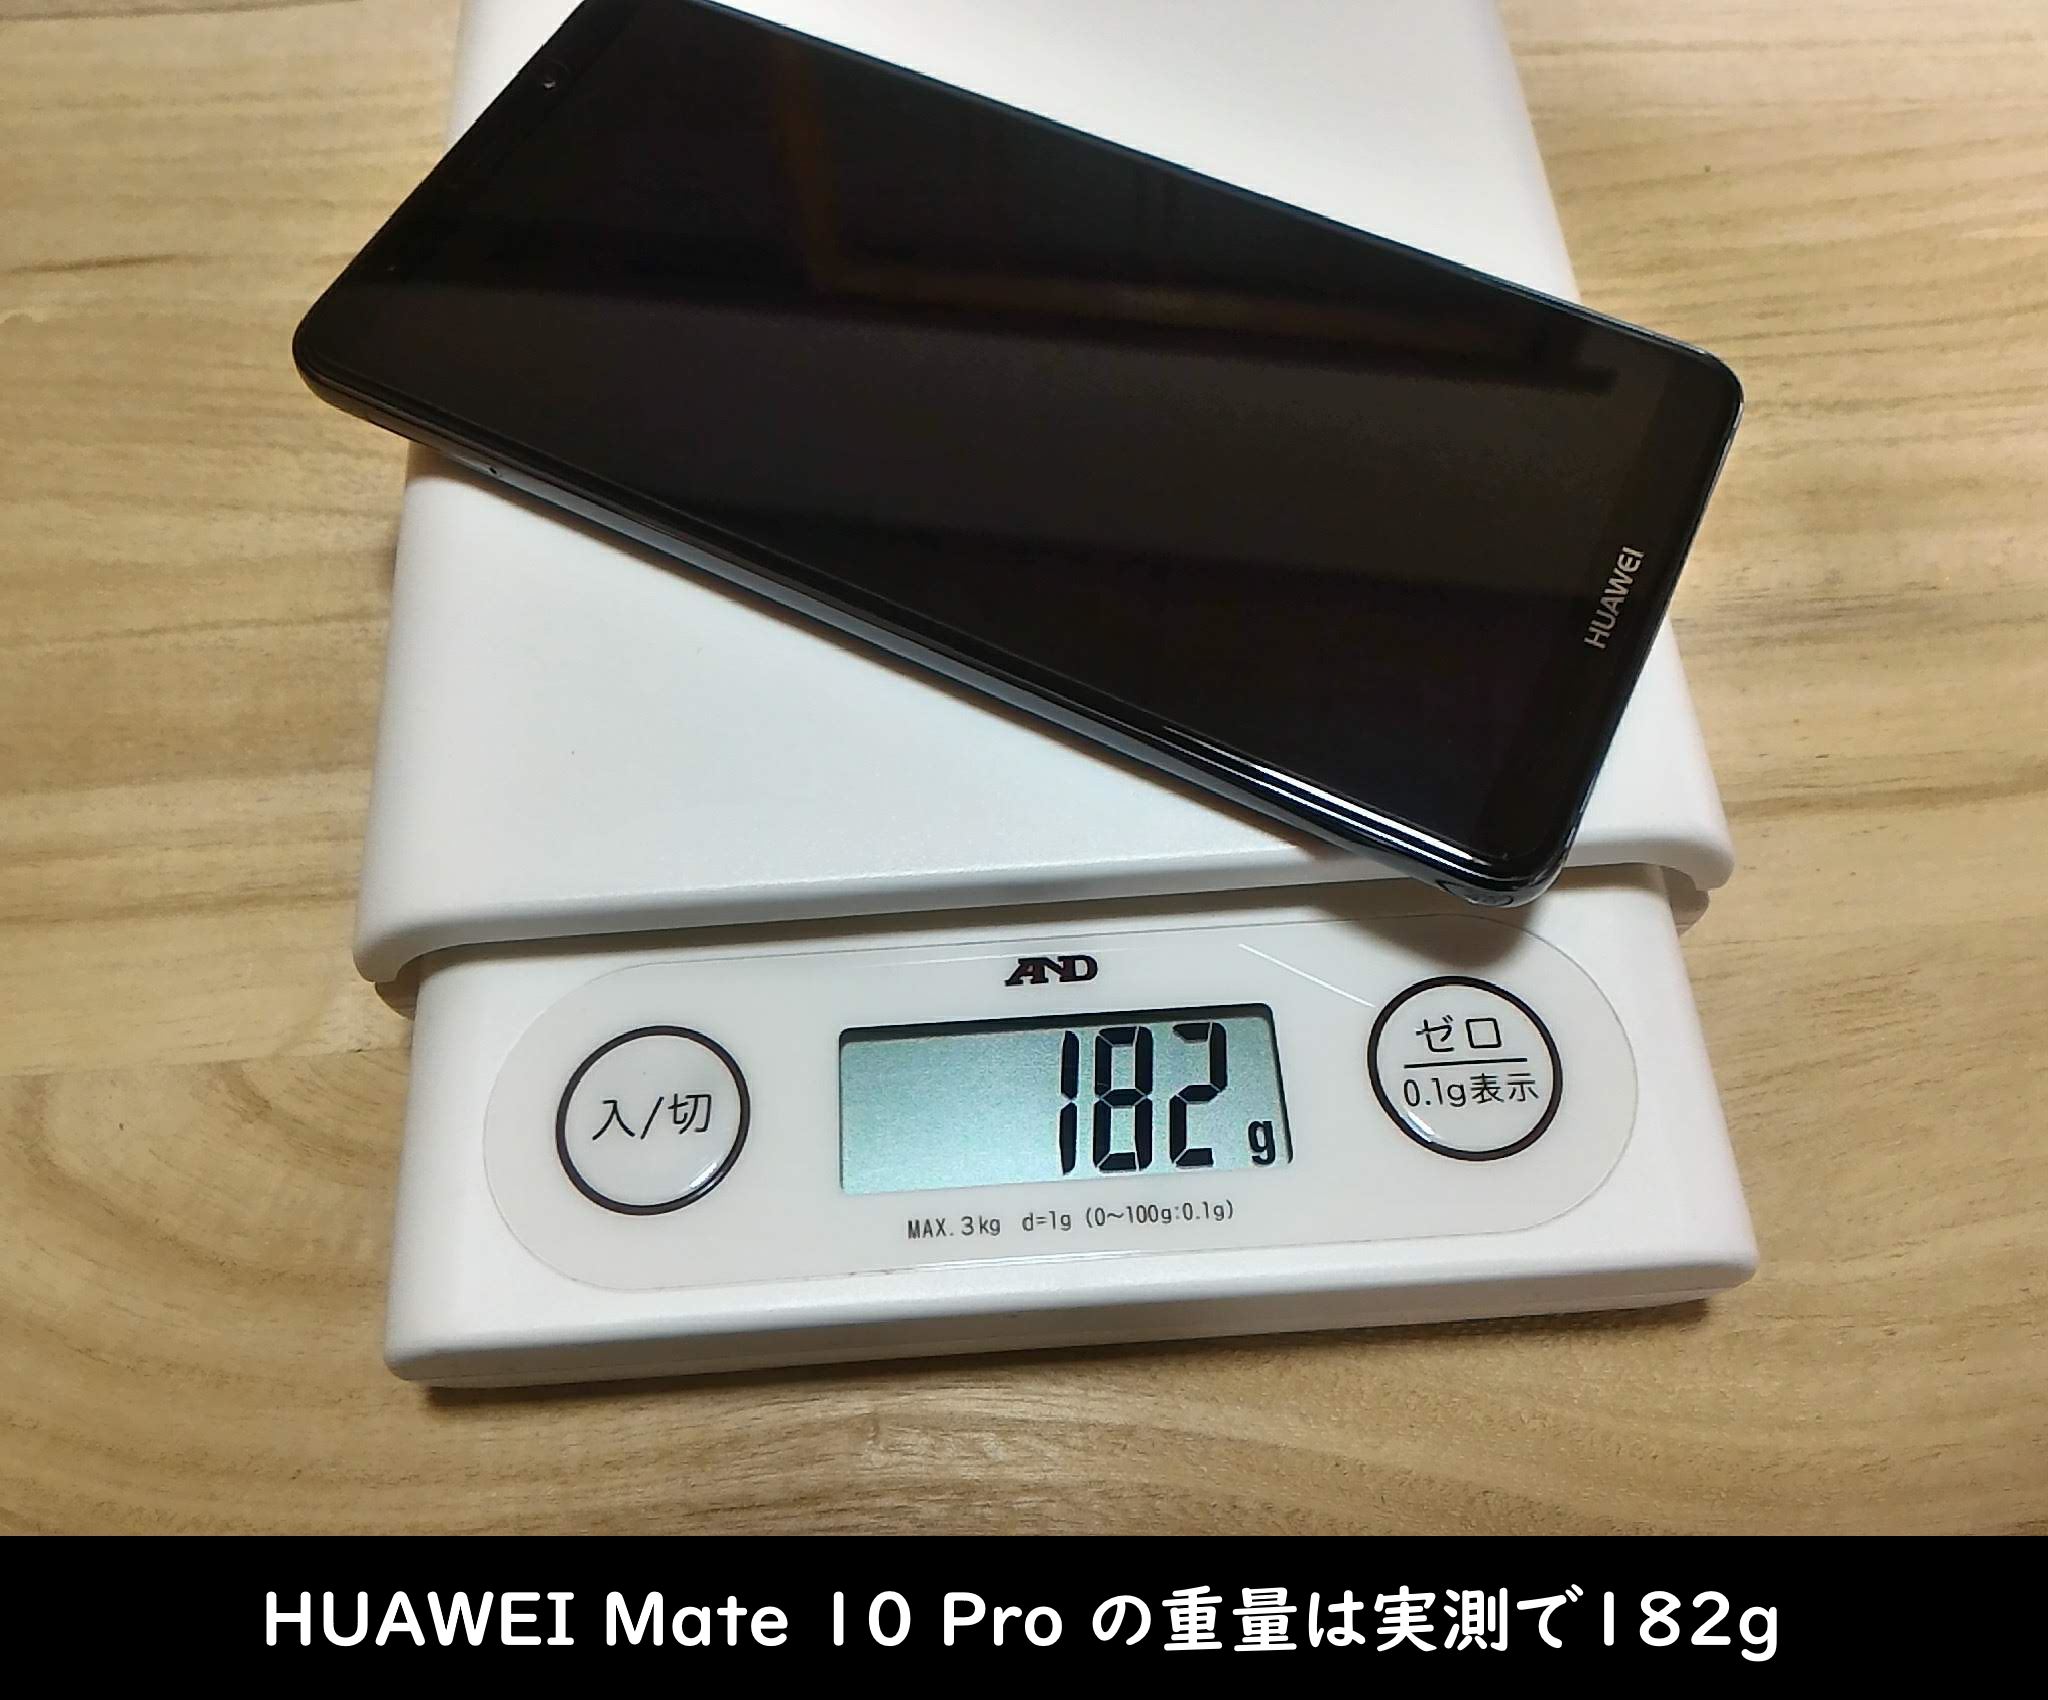 HUAWEI Mate 10 Pro の重量は実測で182g